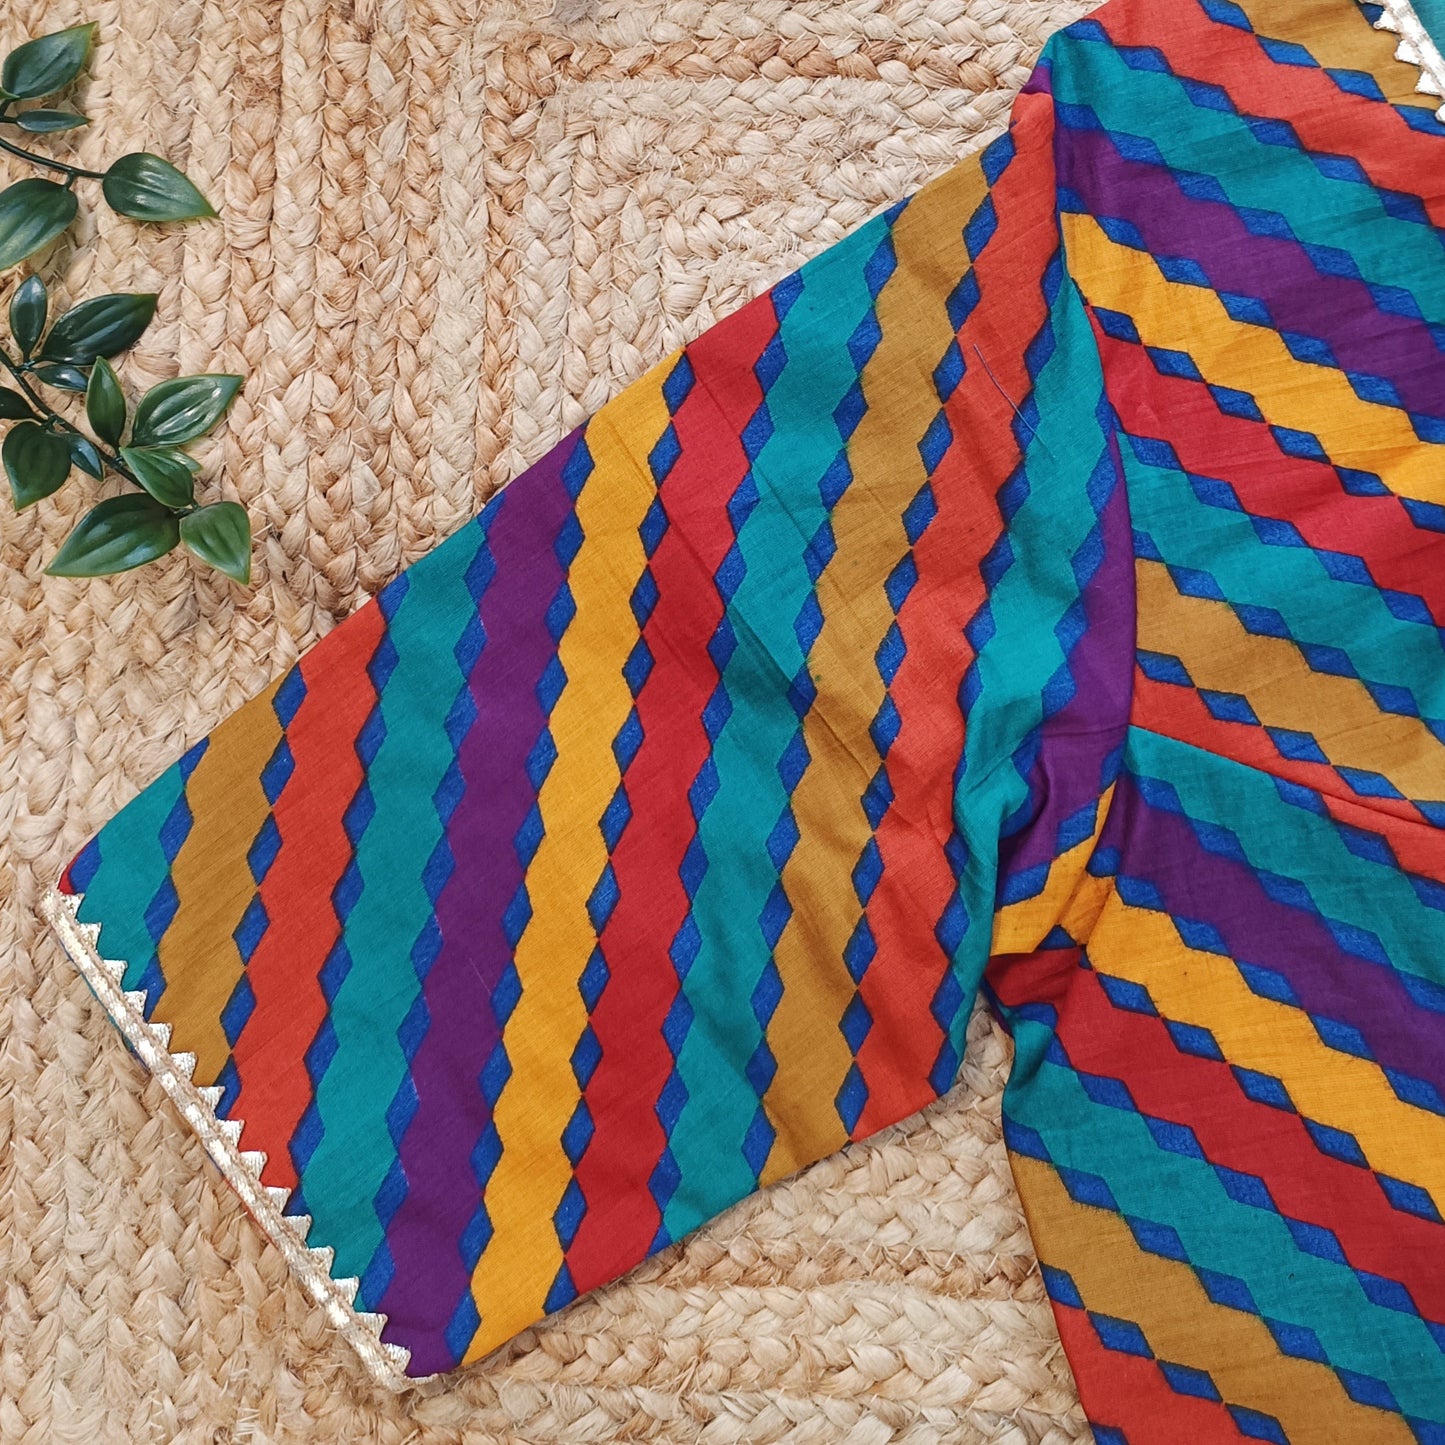 Multicoloured Leheriya Stripes Magenta blouse